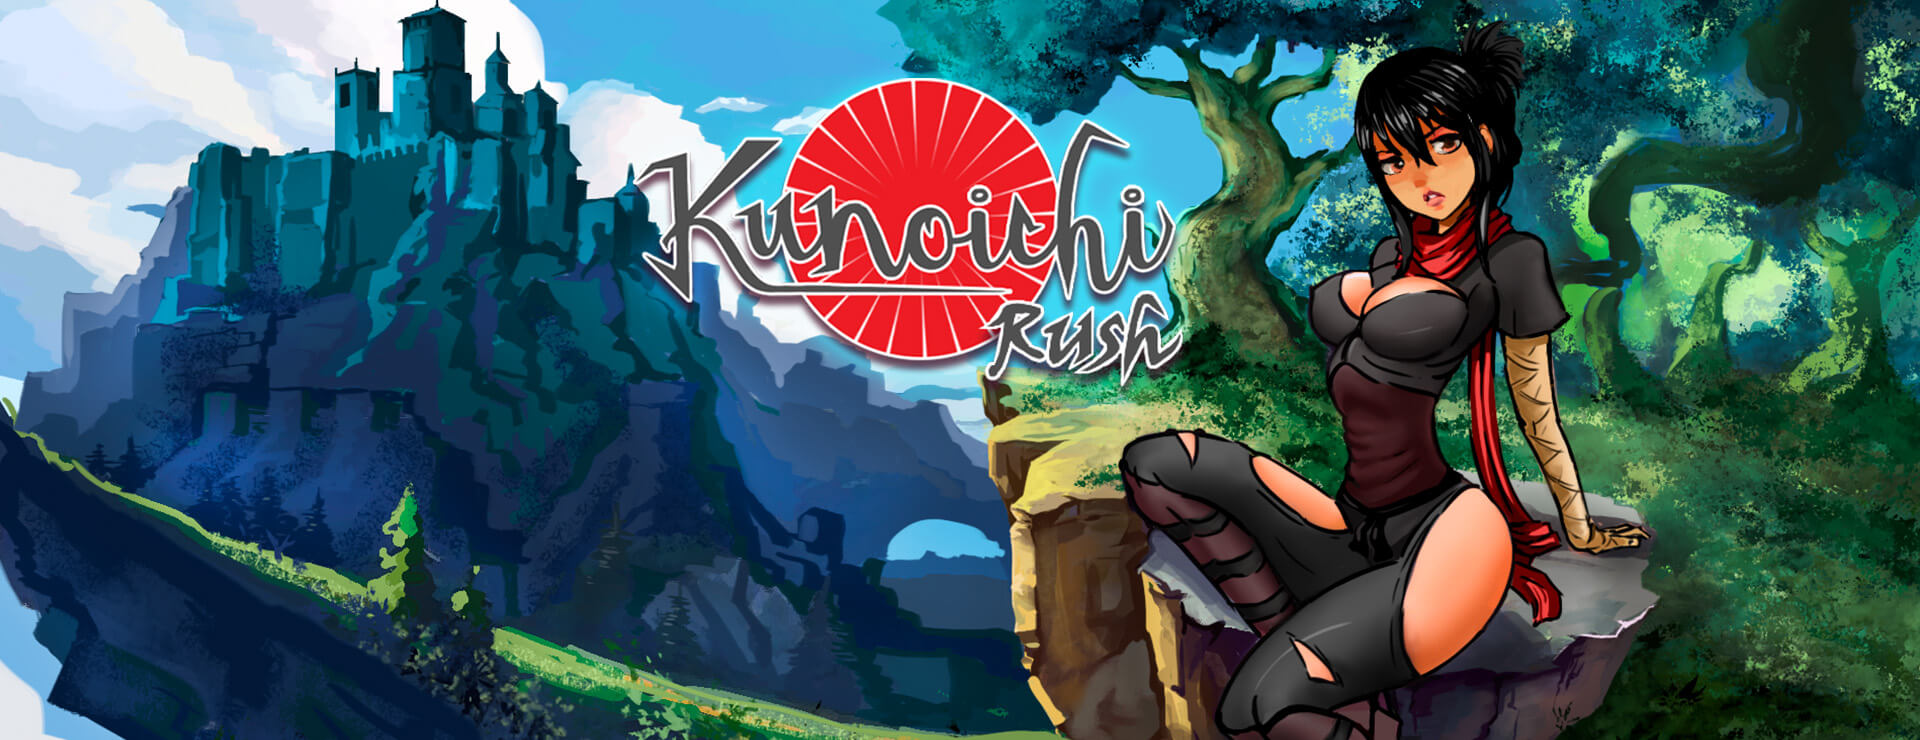 Kunoichi Rush - Action Adventure Spiel